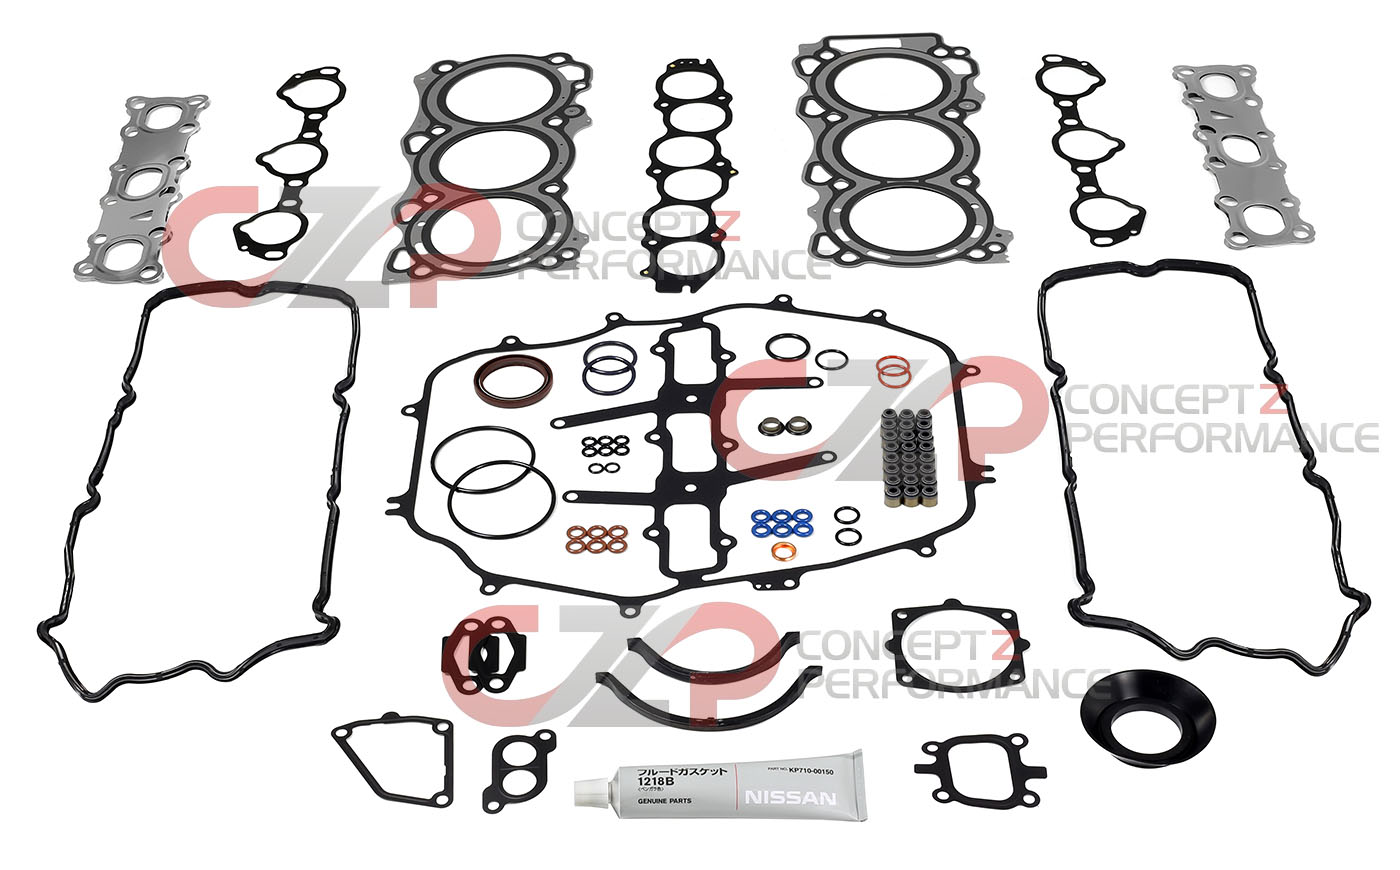 Nissan OEM Engine Gasket Kit, VQ35DE - Nissan 350Z 05-06 Z33 / Infiniti G35 05-07 V35